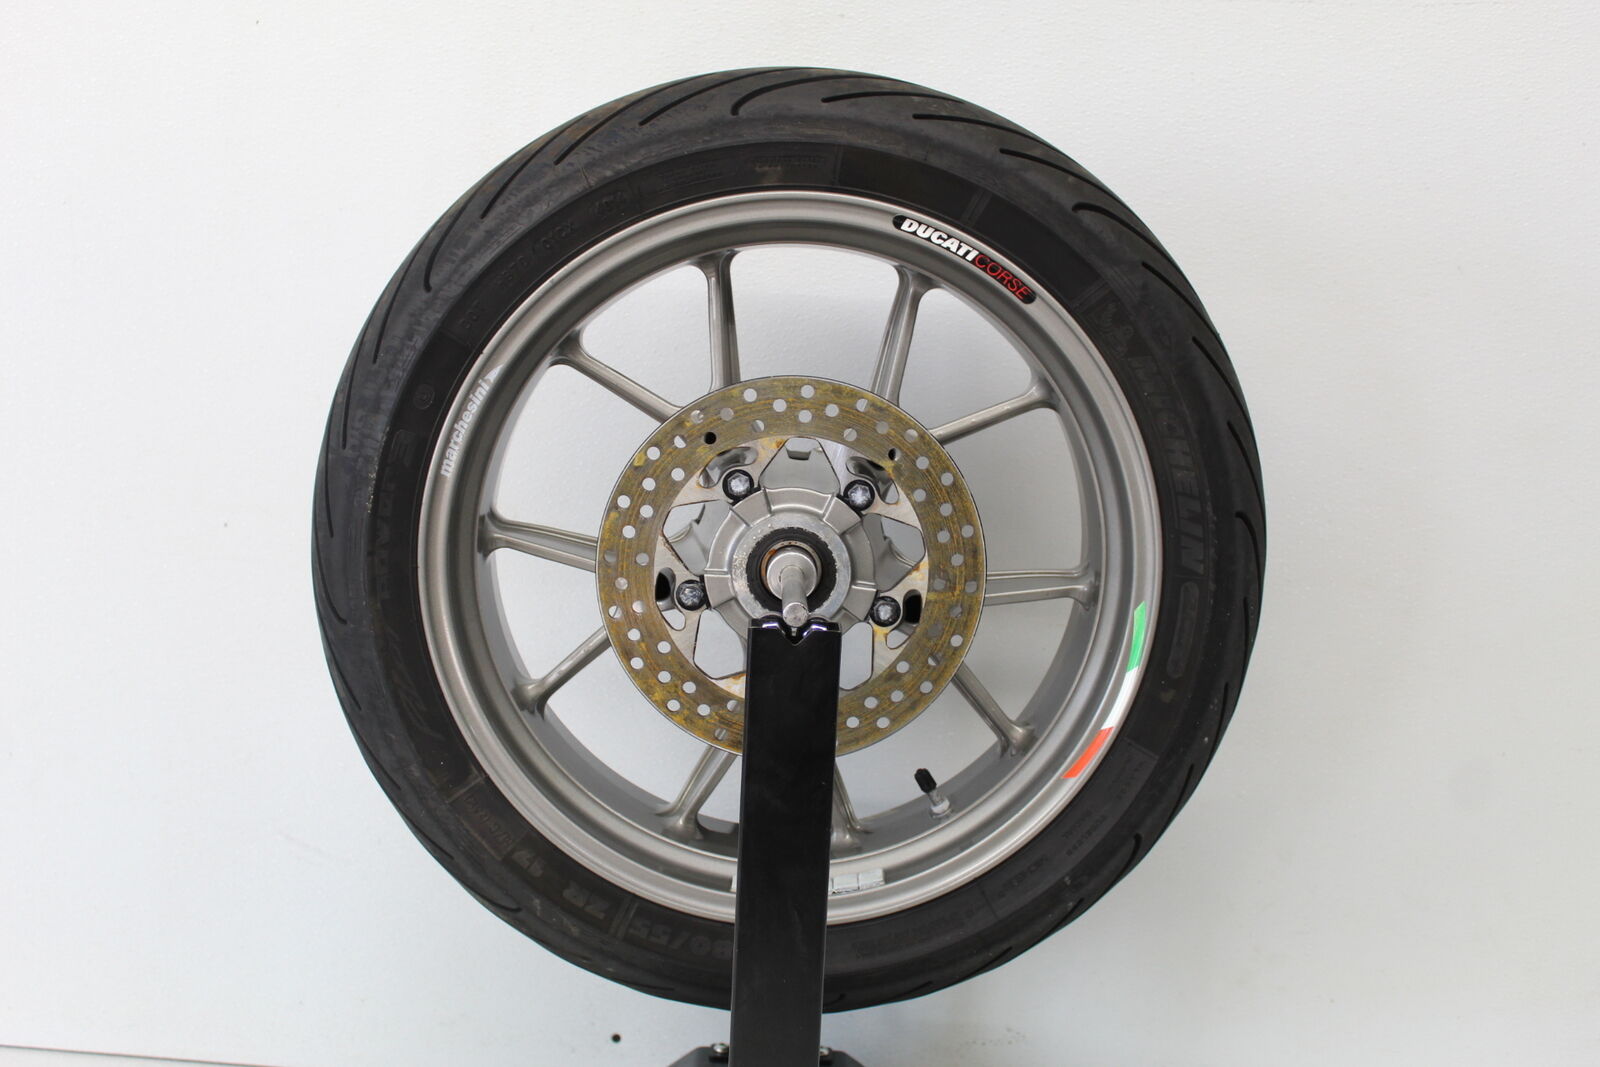 03-06 Ducati 749 Biposto Marchesini Rear Wheel Back Rim